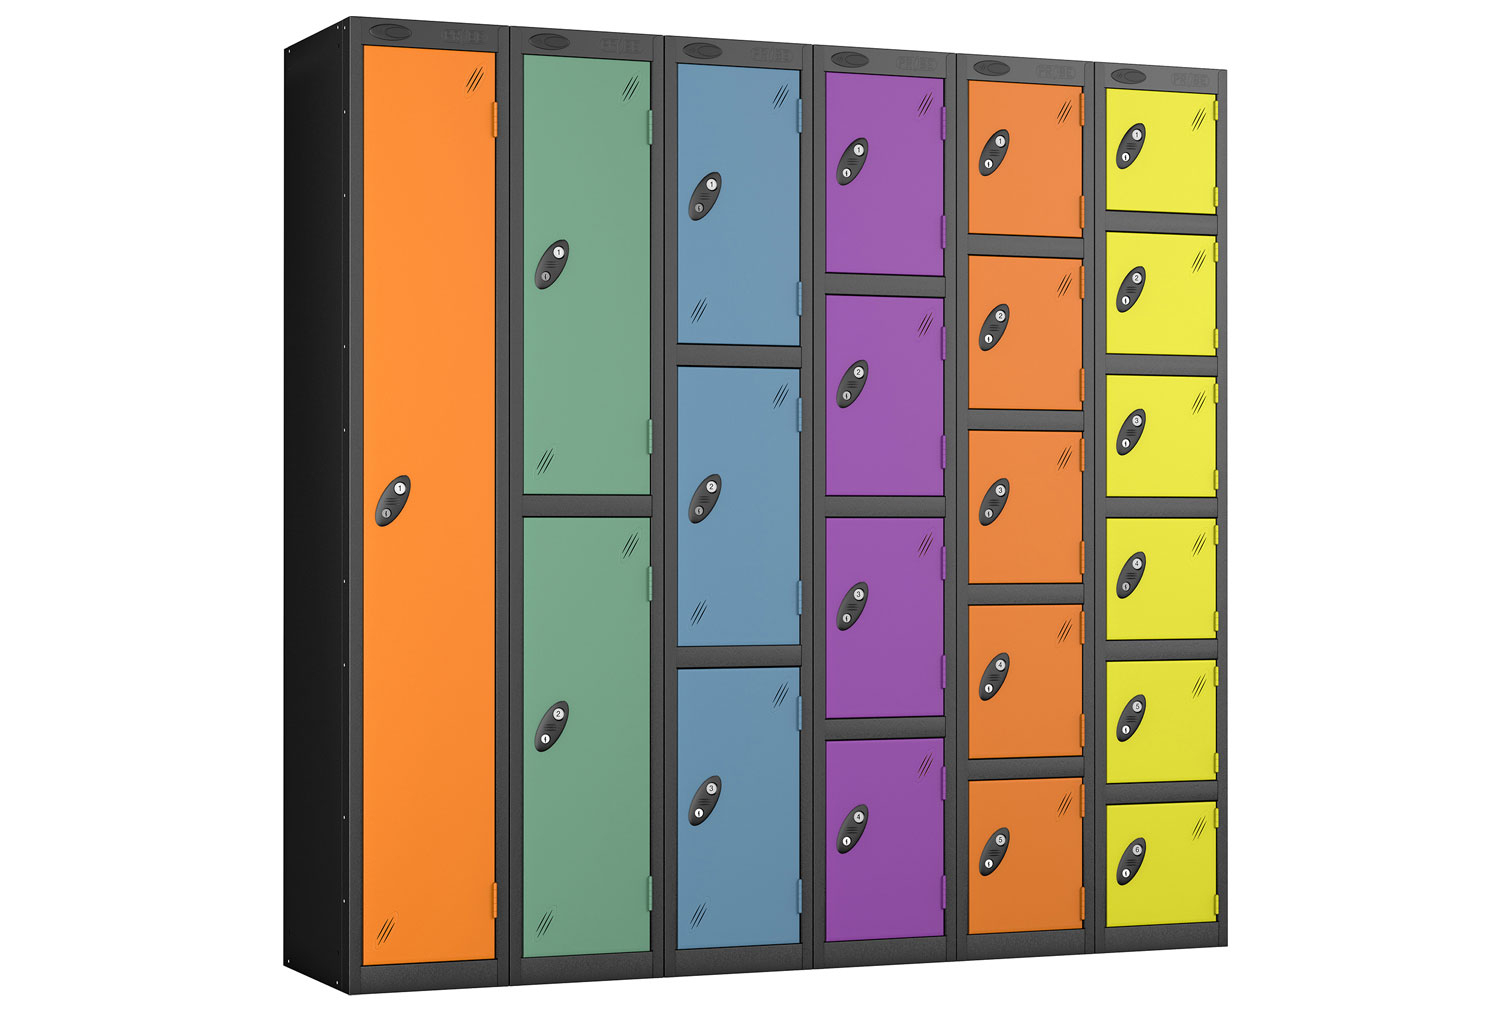 Probe Autumn Colour Lockers With Black Body, 1 Door, 31wx46dx178h (cm), Combination Lock, Black Body, Jade